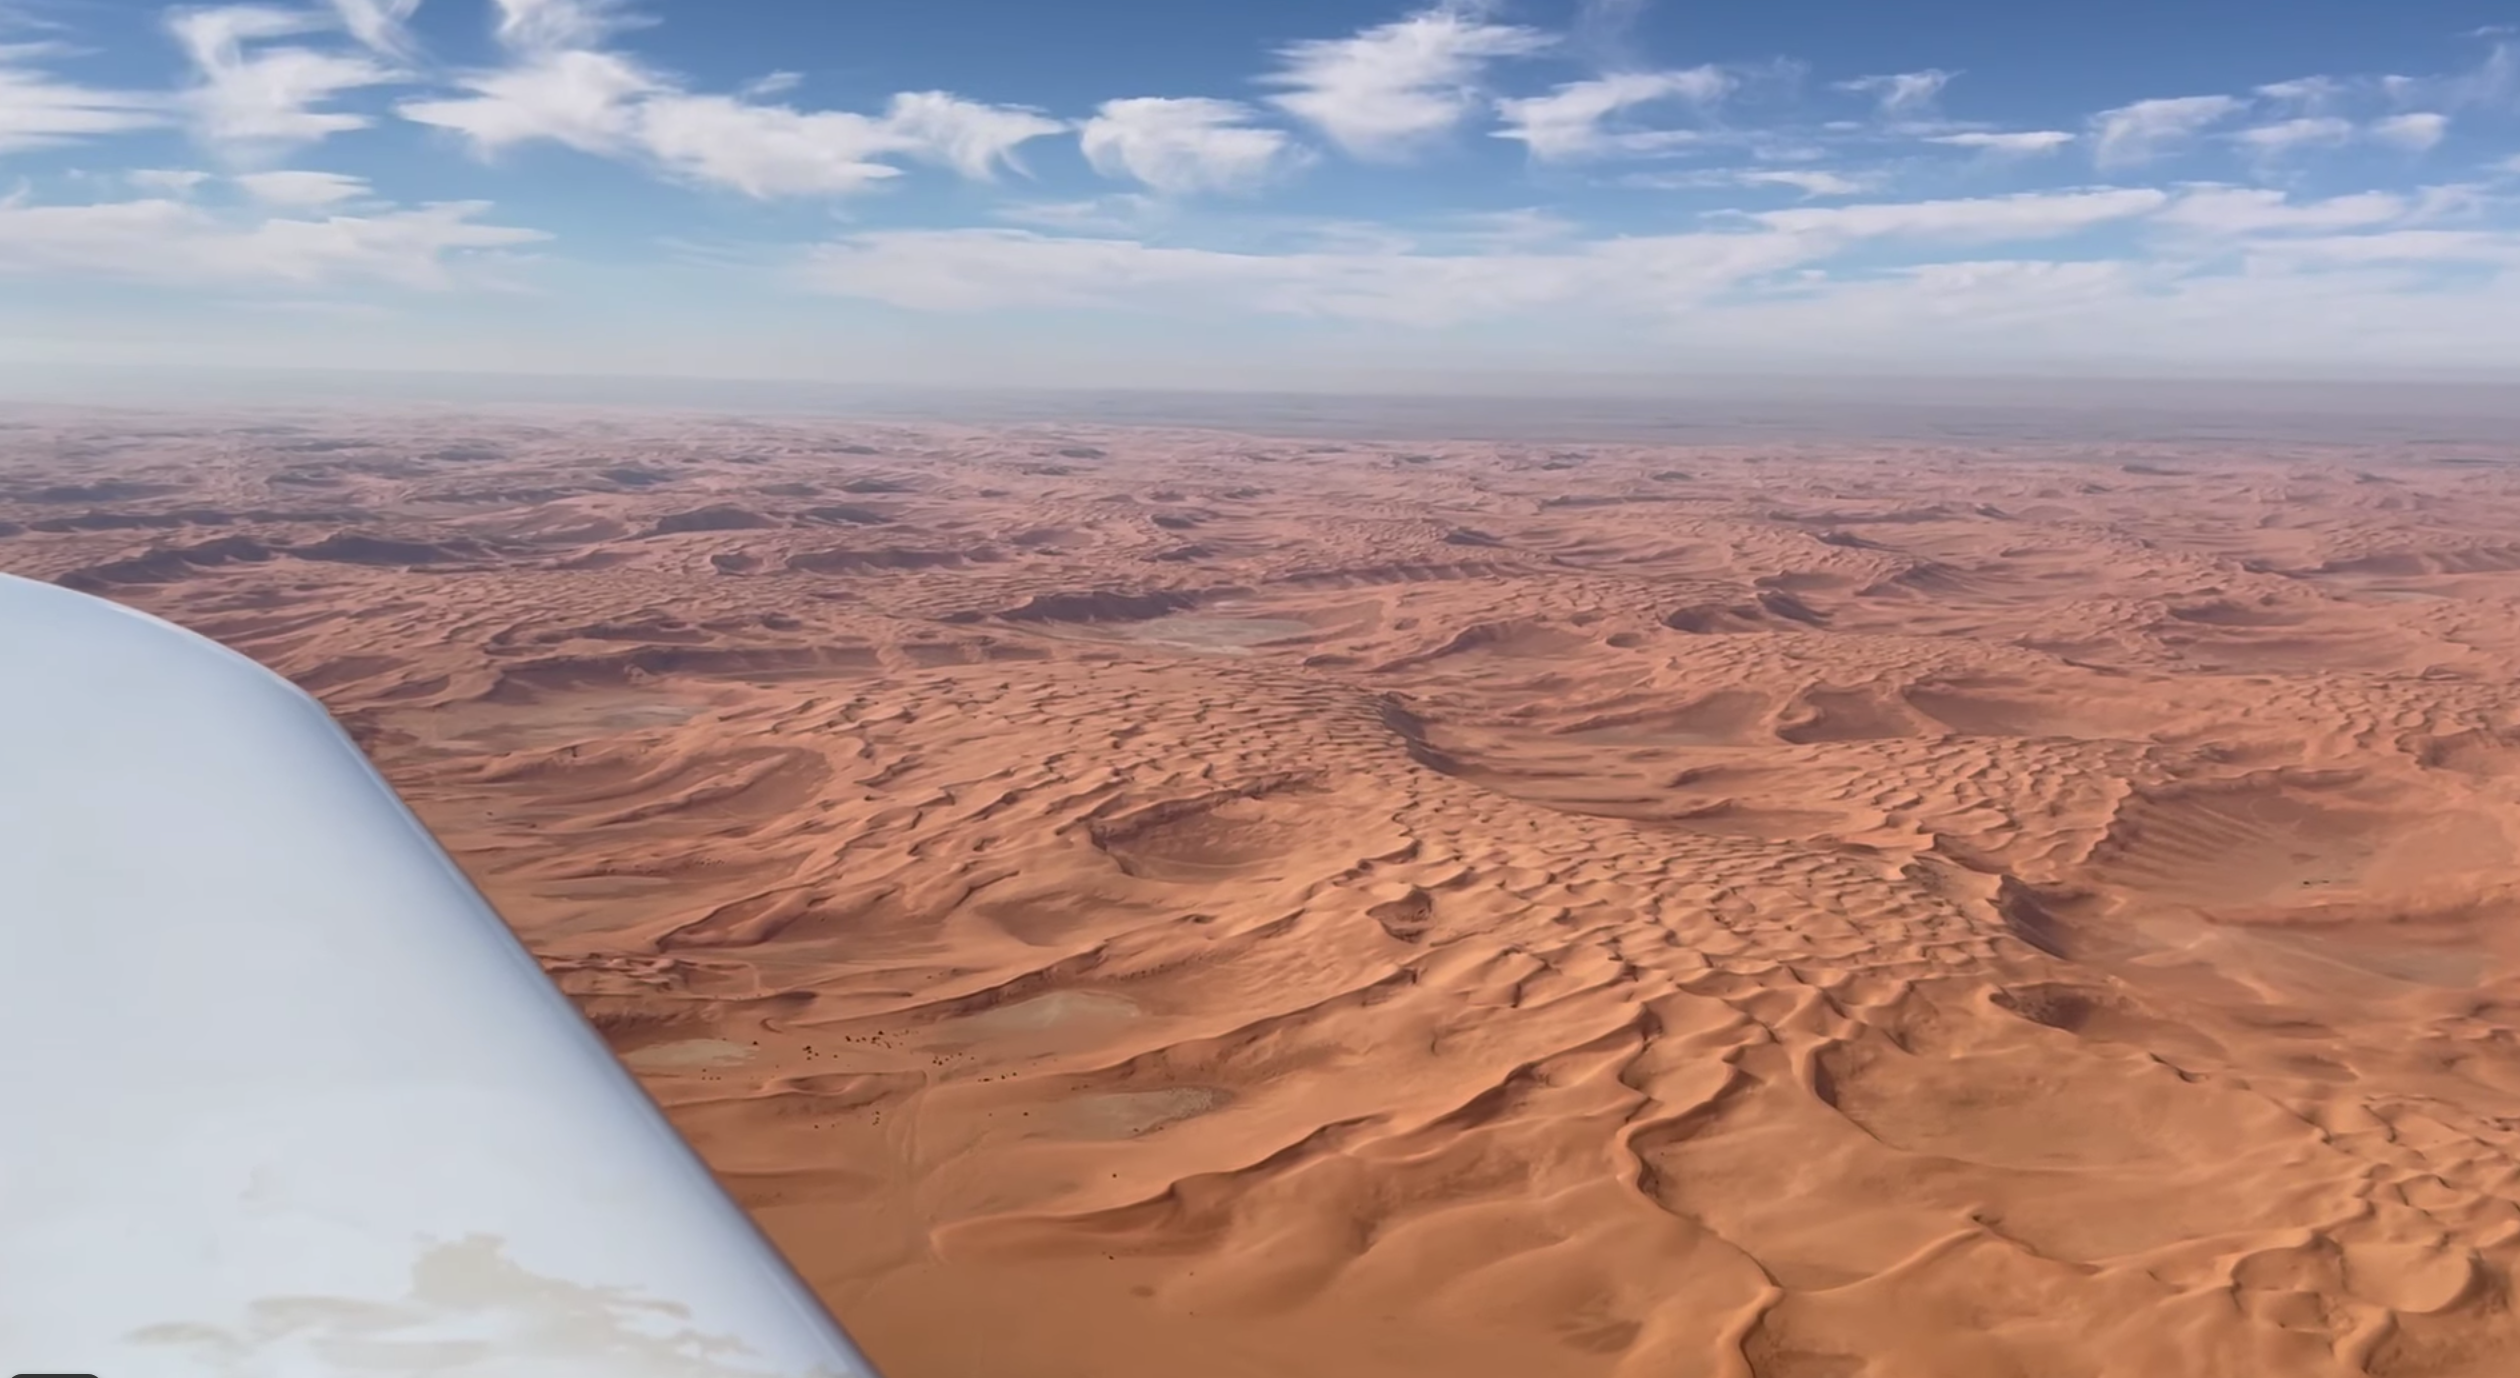 A view over the Saudi Arabian desert as seen from Zara Rutherford’s Shark plane.